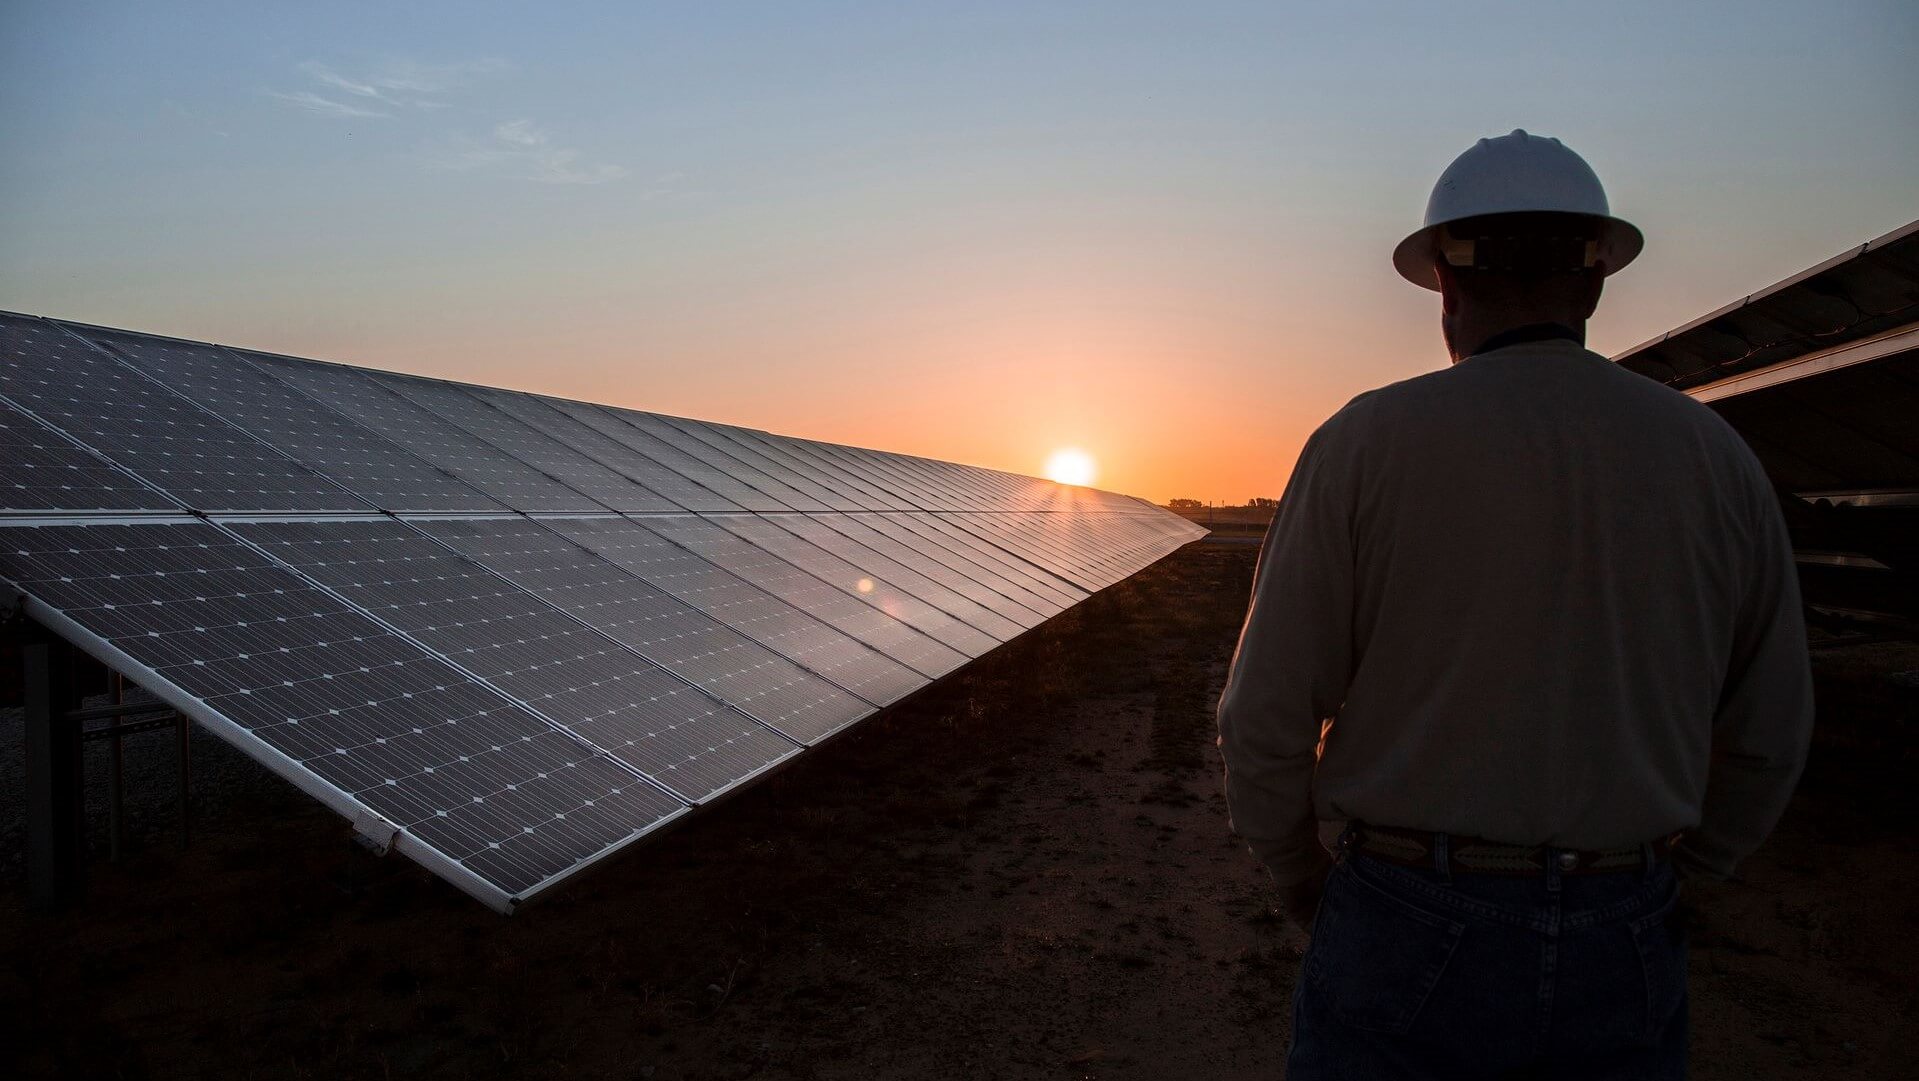 Engineer wearing hard hat, standing by solar panels in solar farm, set against orange sunrise sky